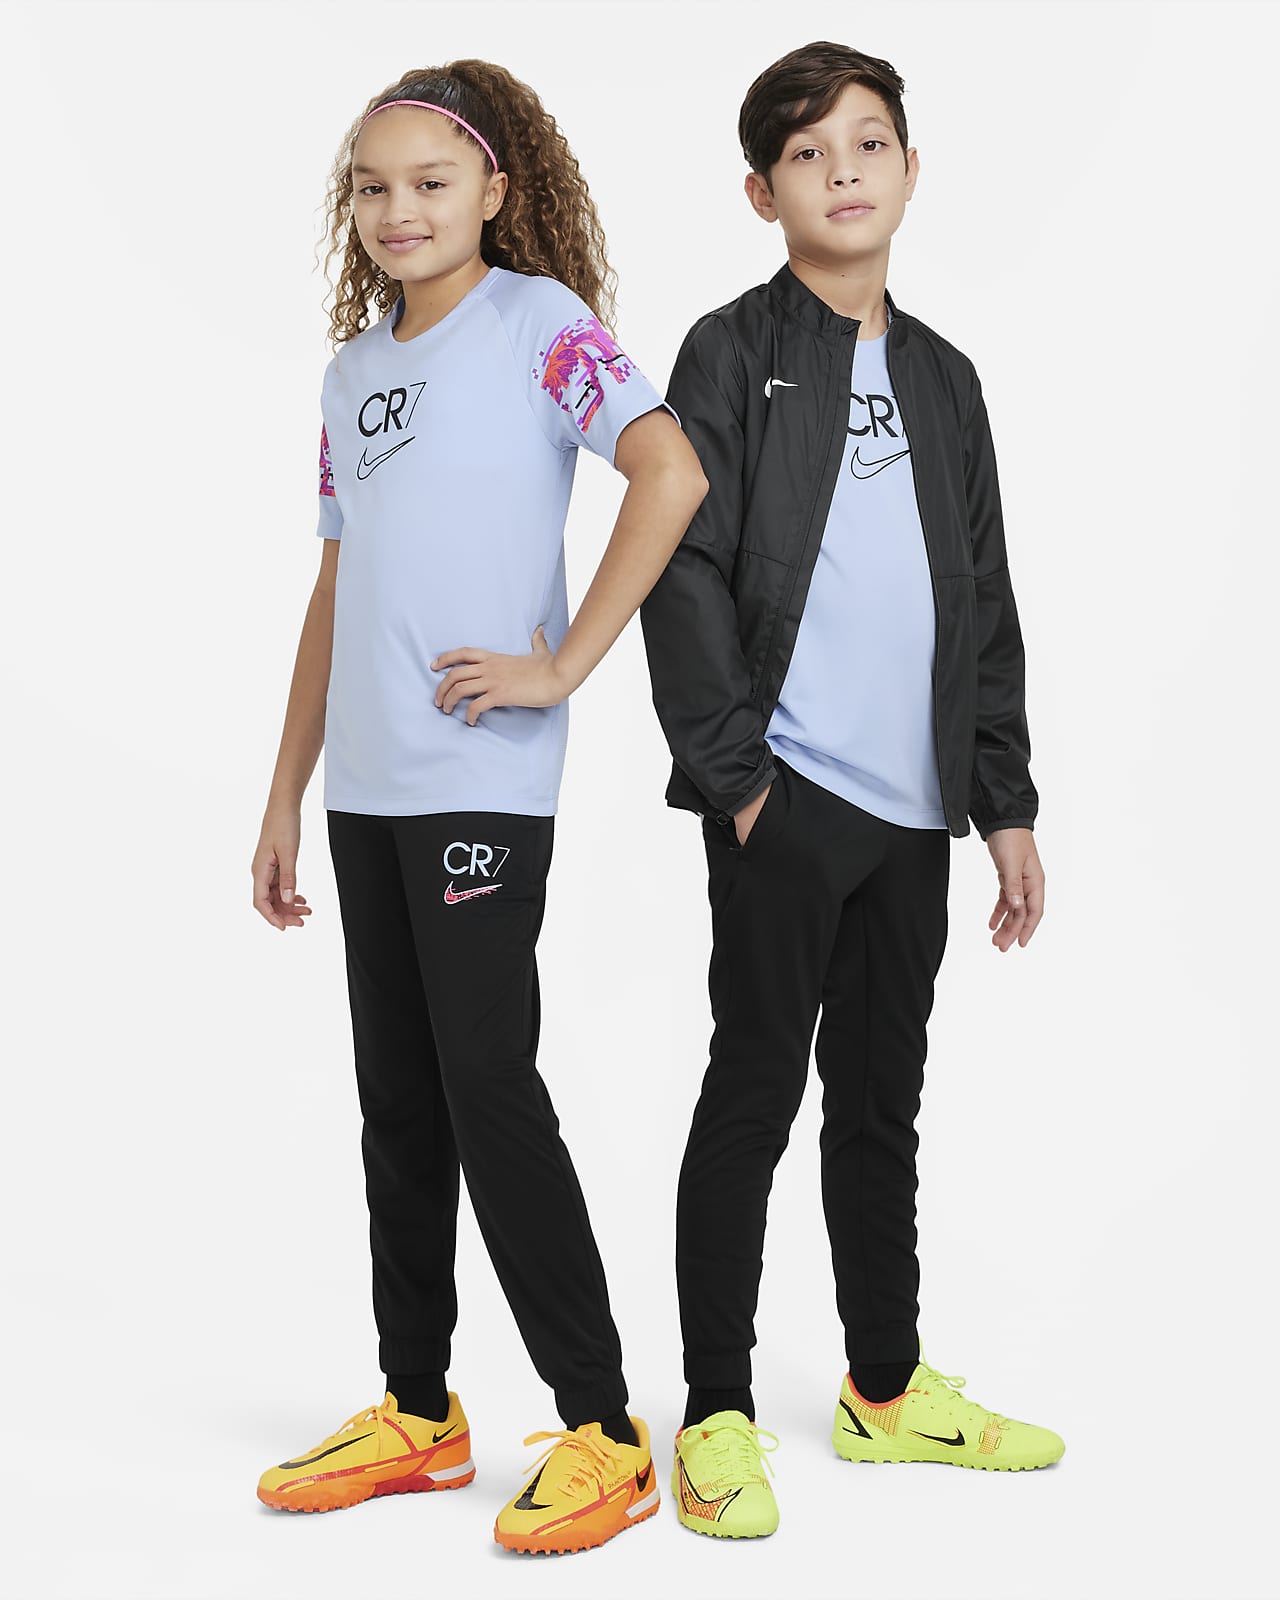 som jacht Afspraak CR7 Voetbaltop met korte mouwen voor kids. Nike NL